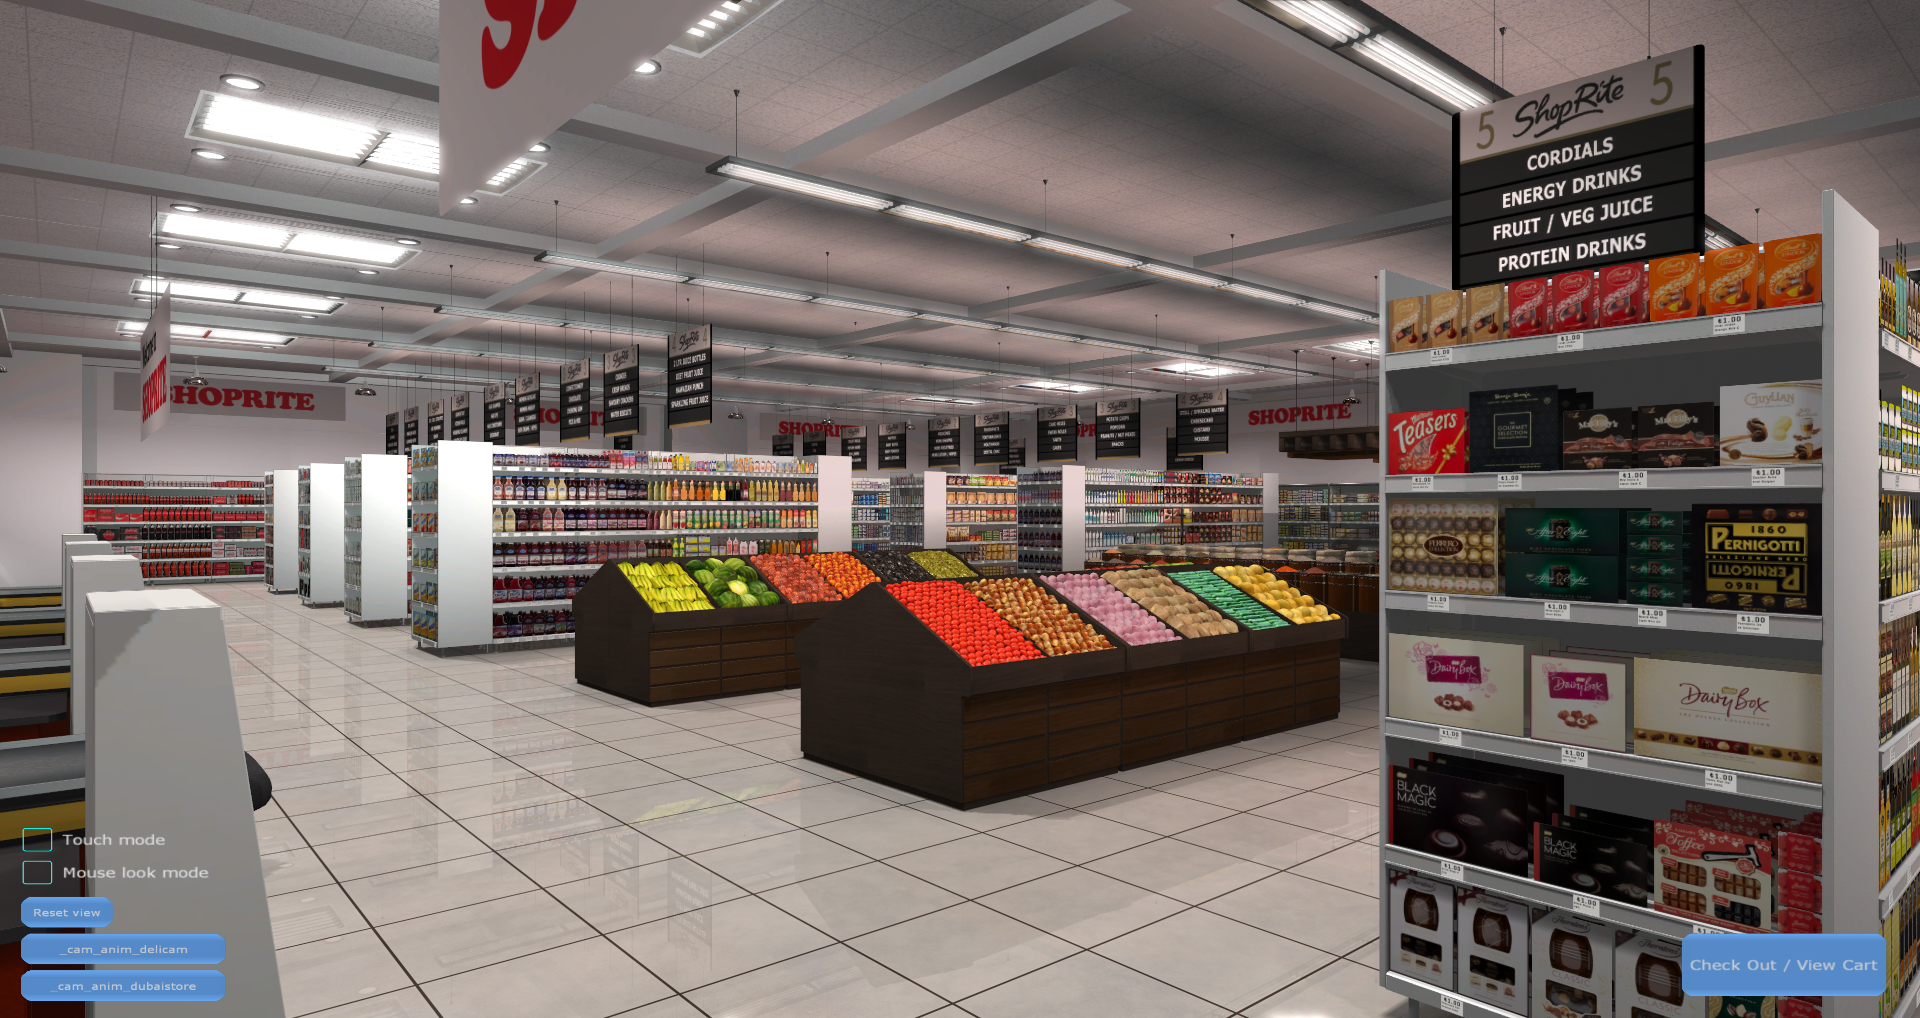 3D Virtual Shopping Virtual Store Screenshot from Carrefour VR Supermarket 2